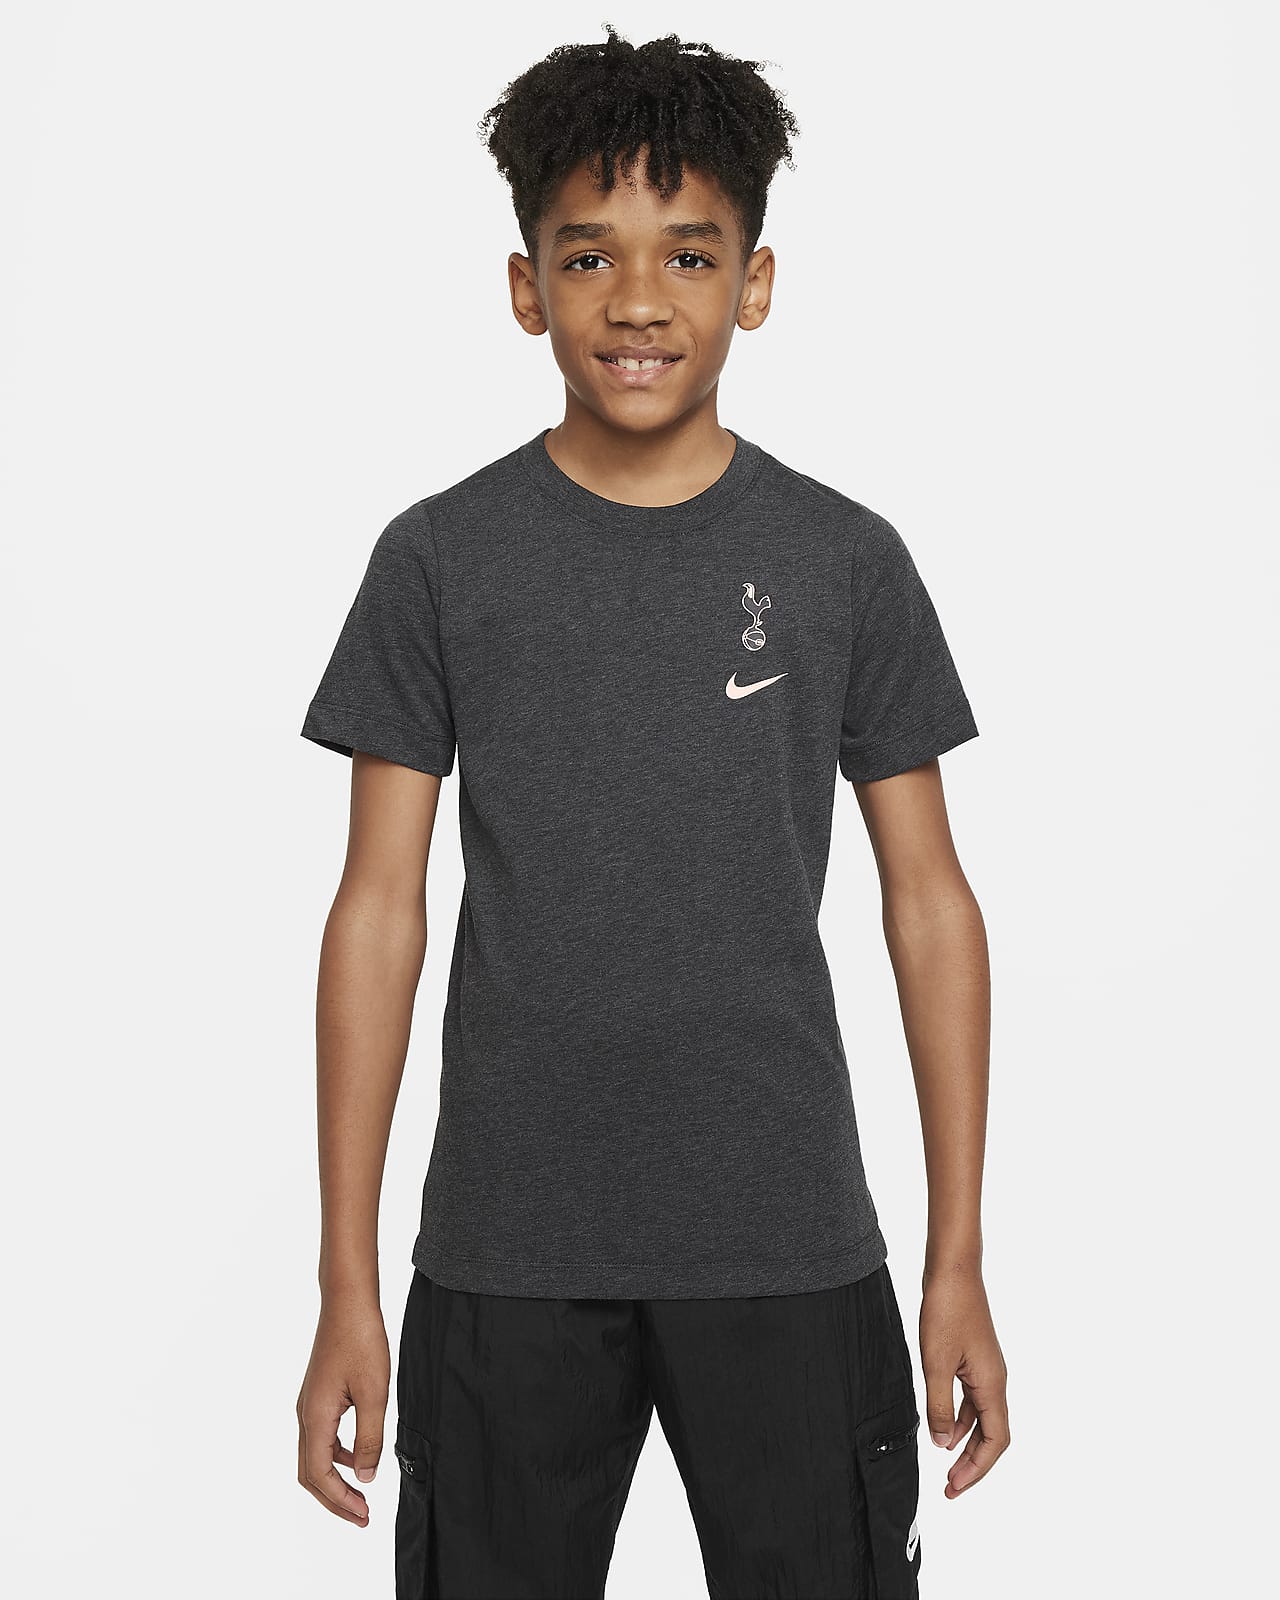 Tottenham Hotspur Older Kids' Nike Football T-Shirt